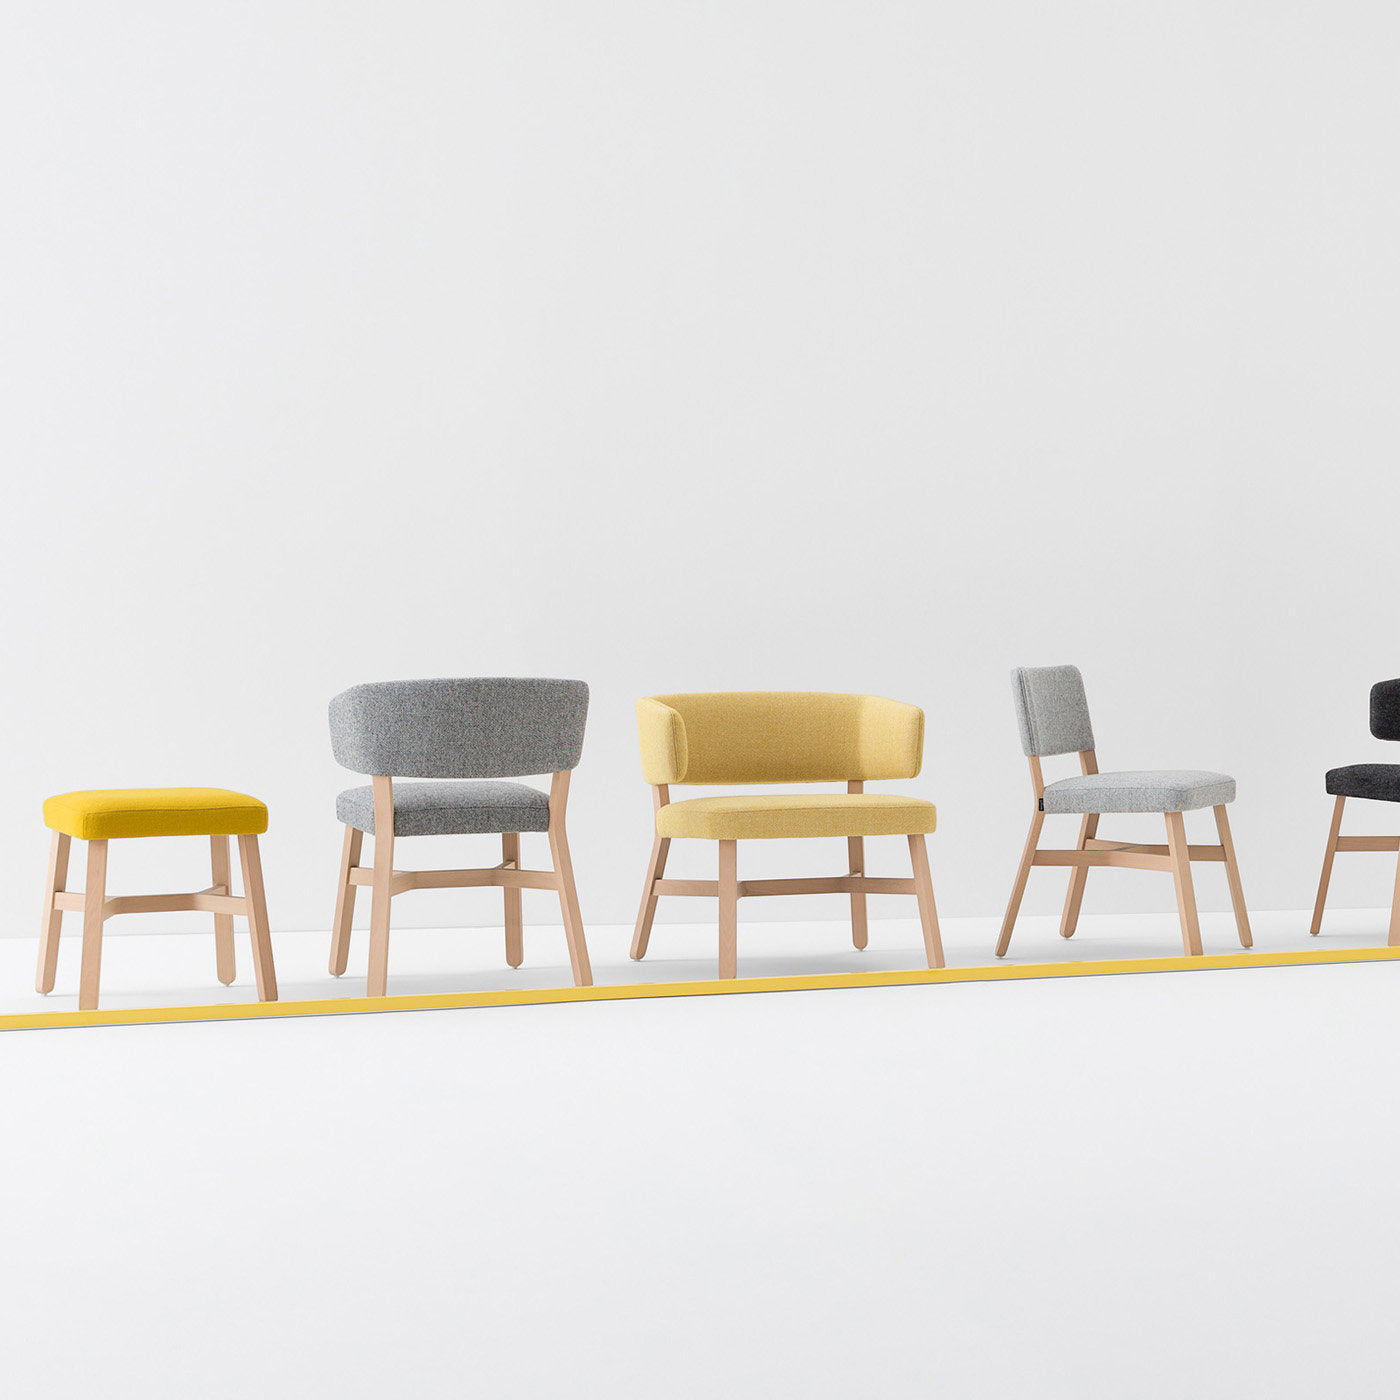 Croissant Lounge Chair by Emilio Nanni #3 - Alternative view 1